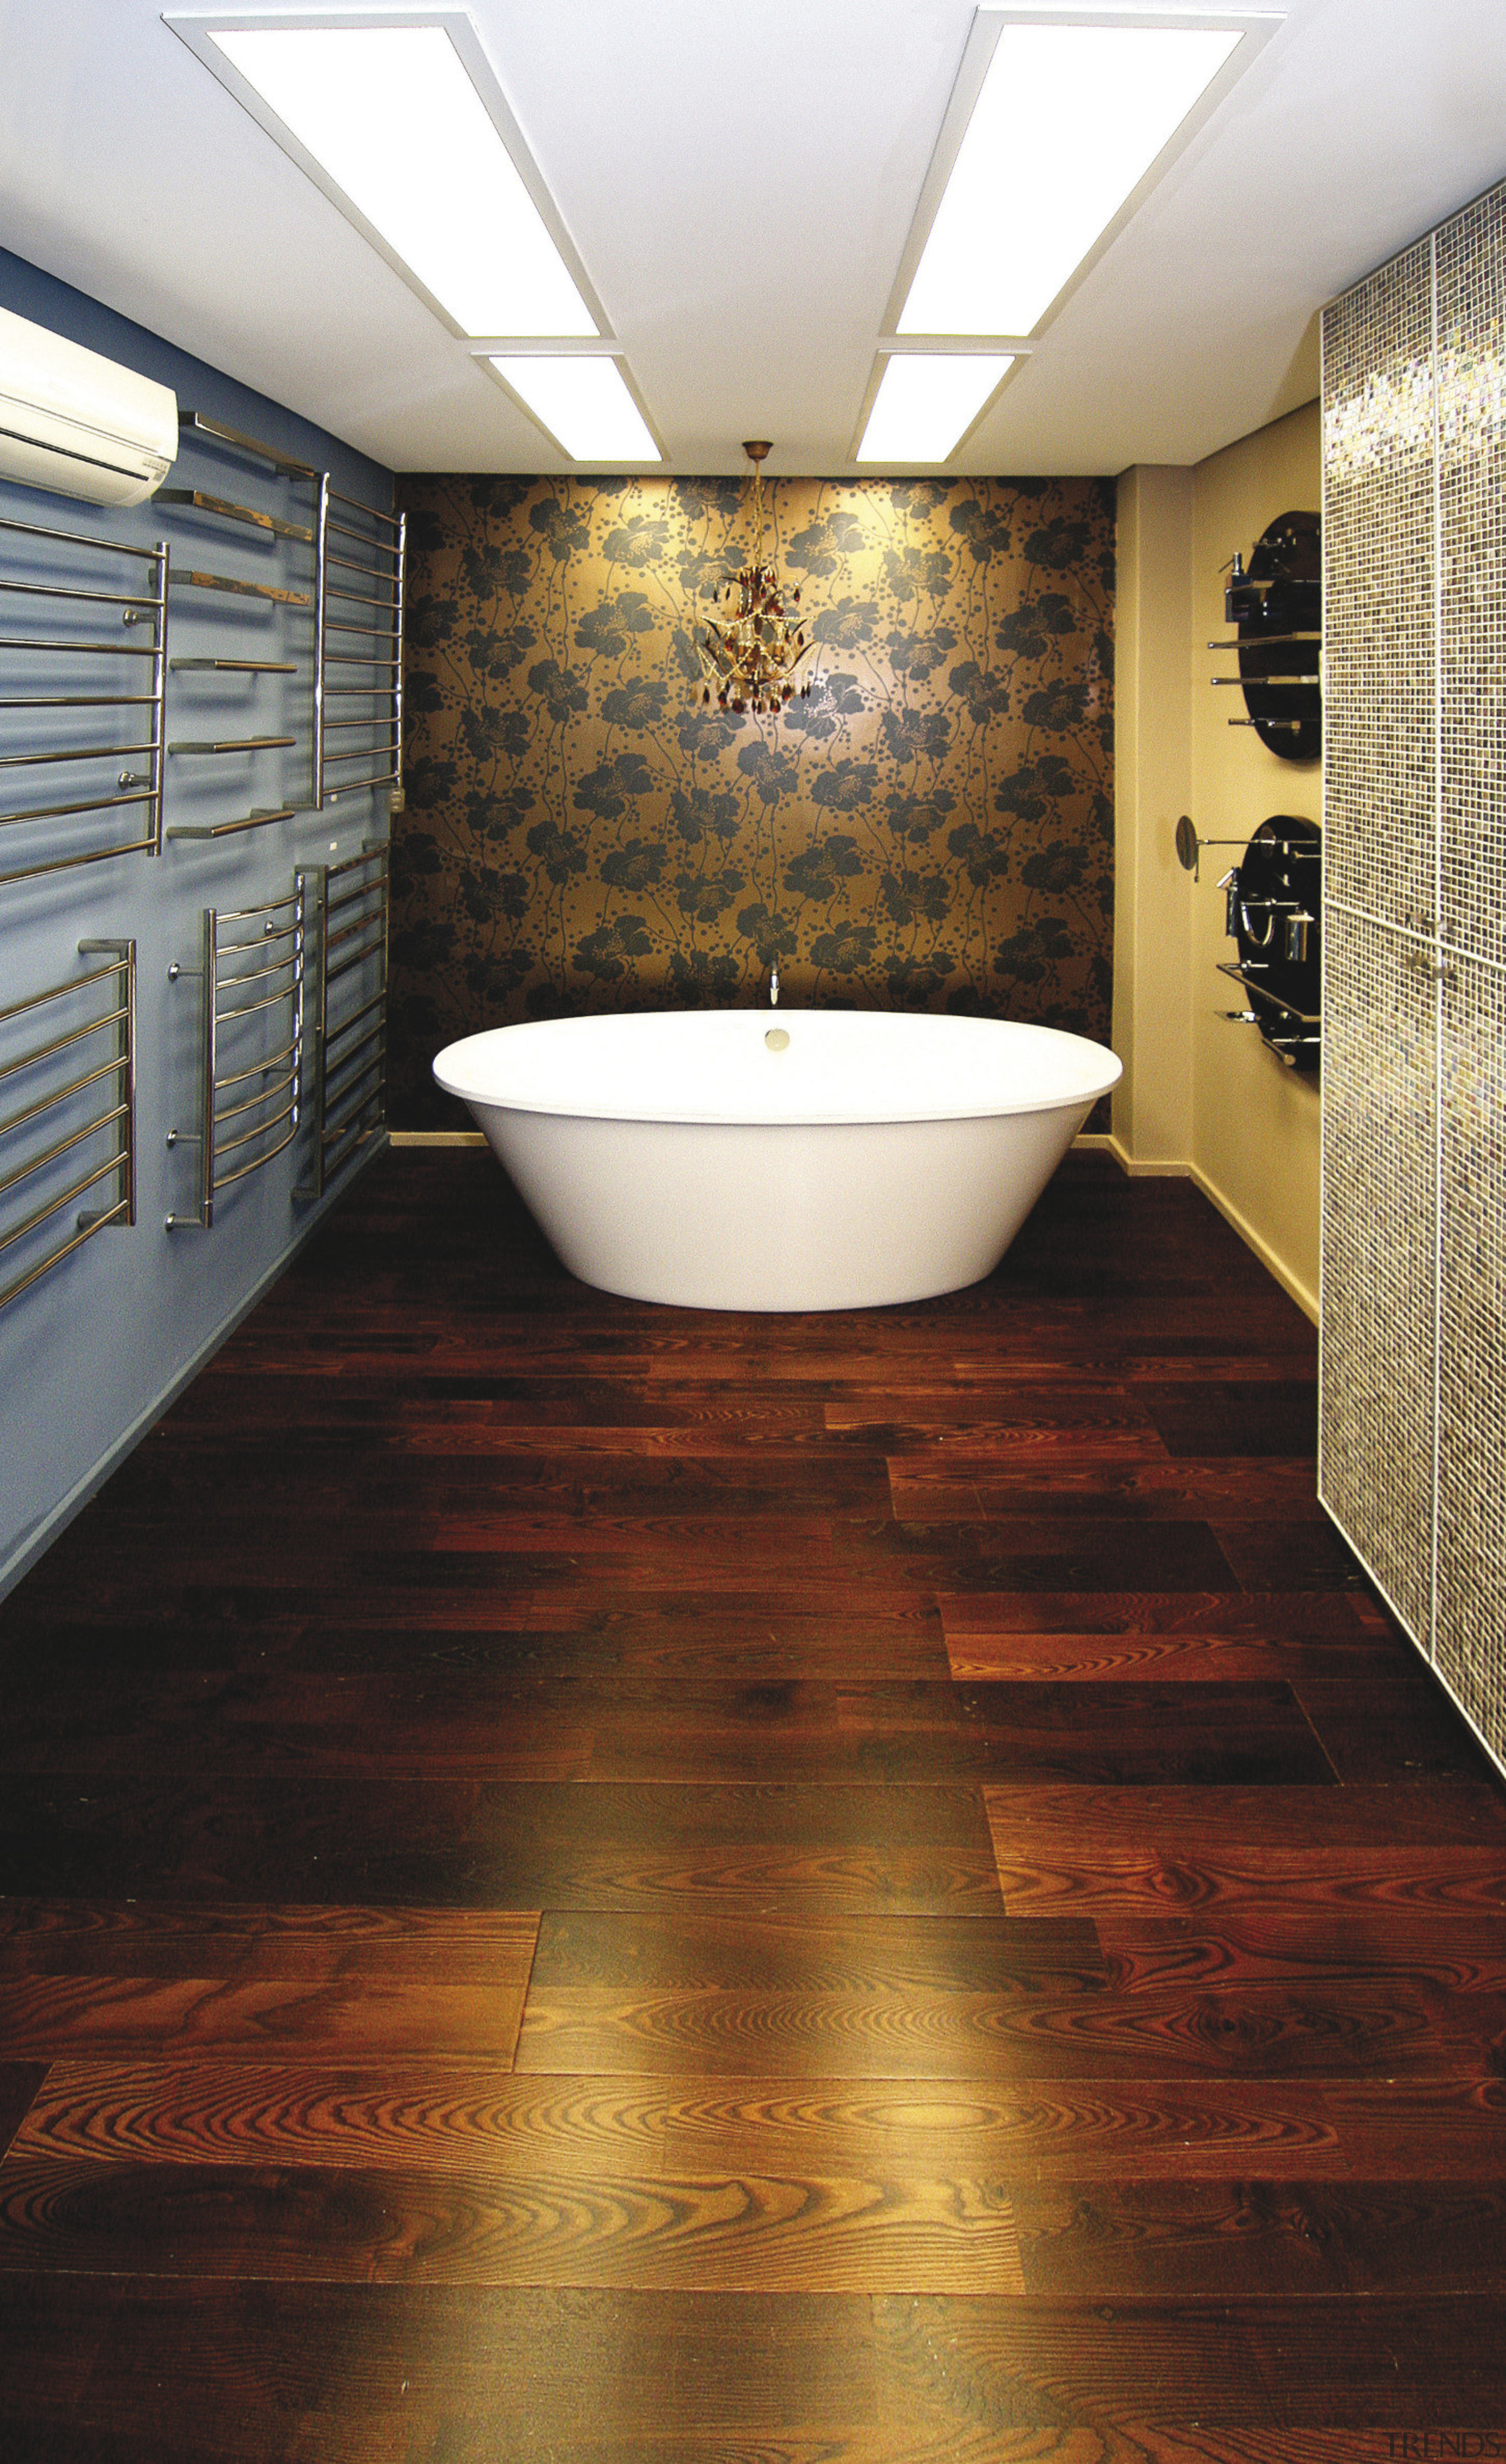 View of contemporary bathroom fixtures. - View of bathroom, ceiling, floor, flooring, hardwood, interior design, laminate flooring, room, tile, wall, wood, wood flooring, red